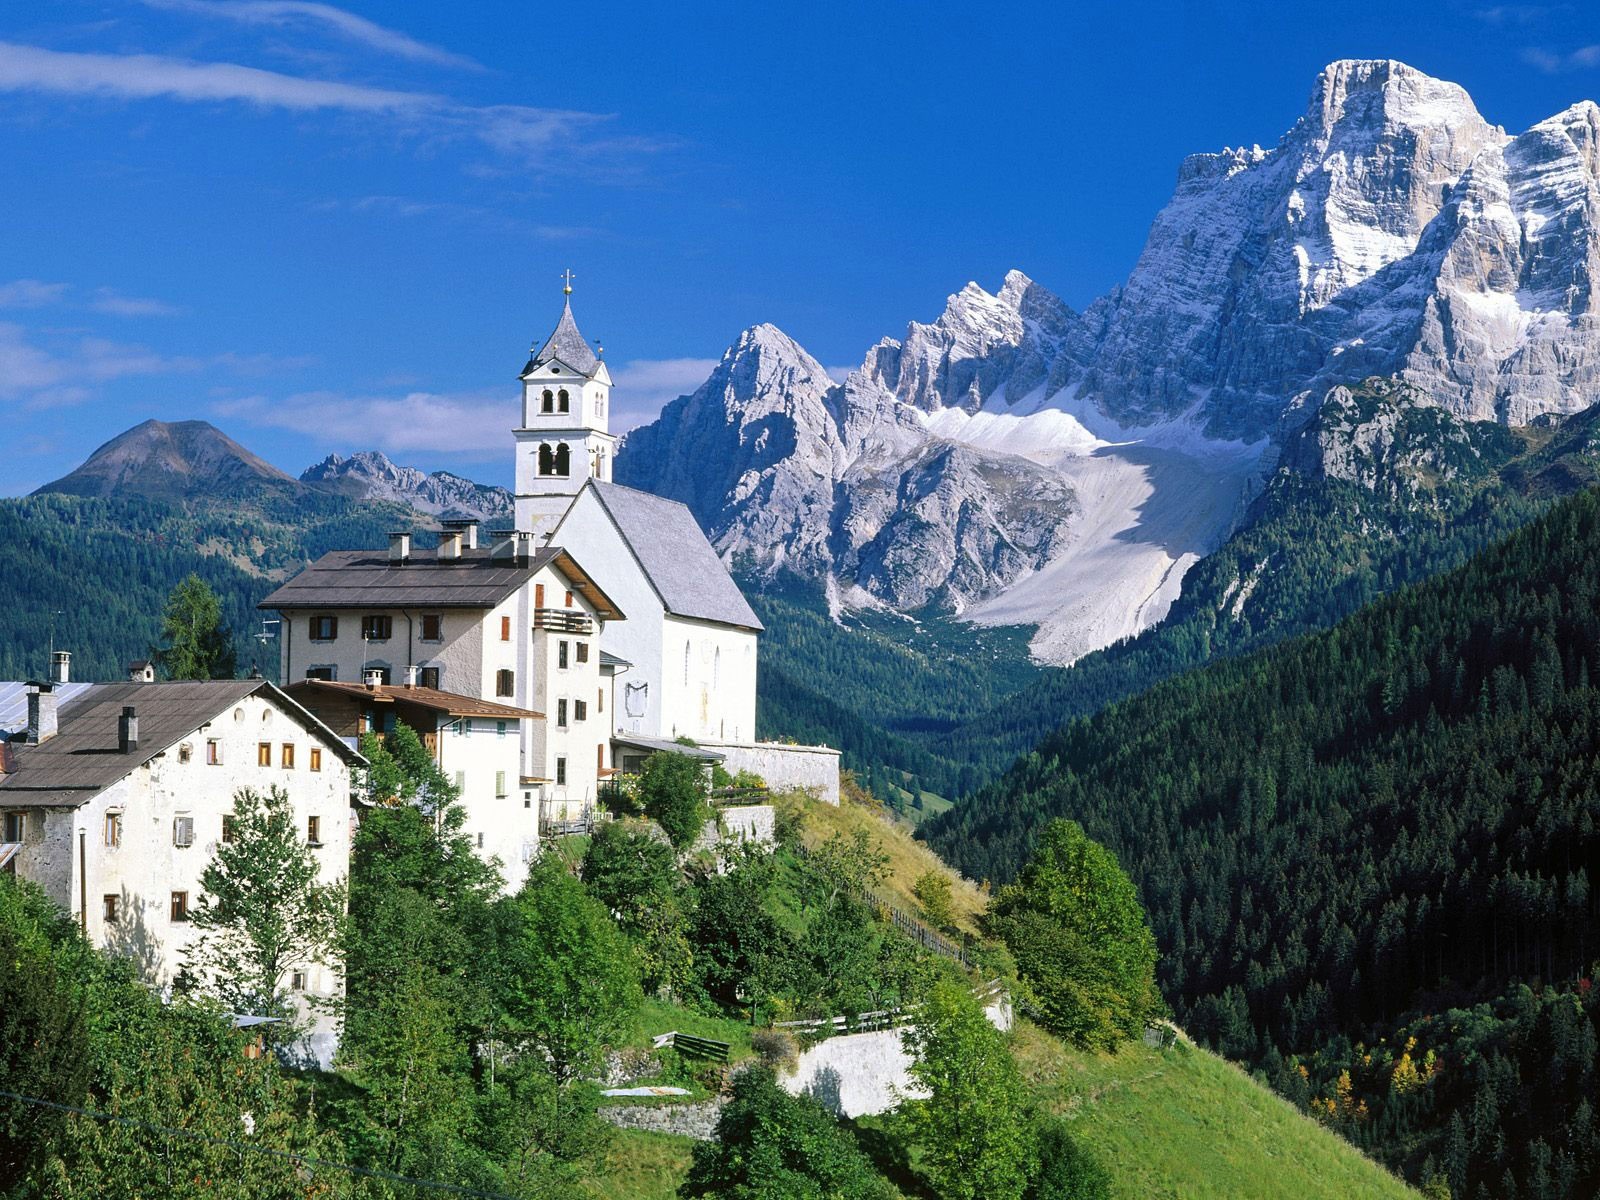 General 1600x1200 Alps mountains nature landscape Switzerland church peak outdoors